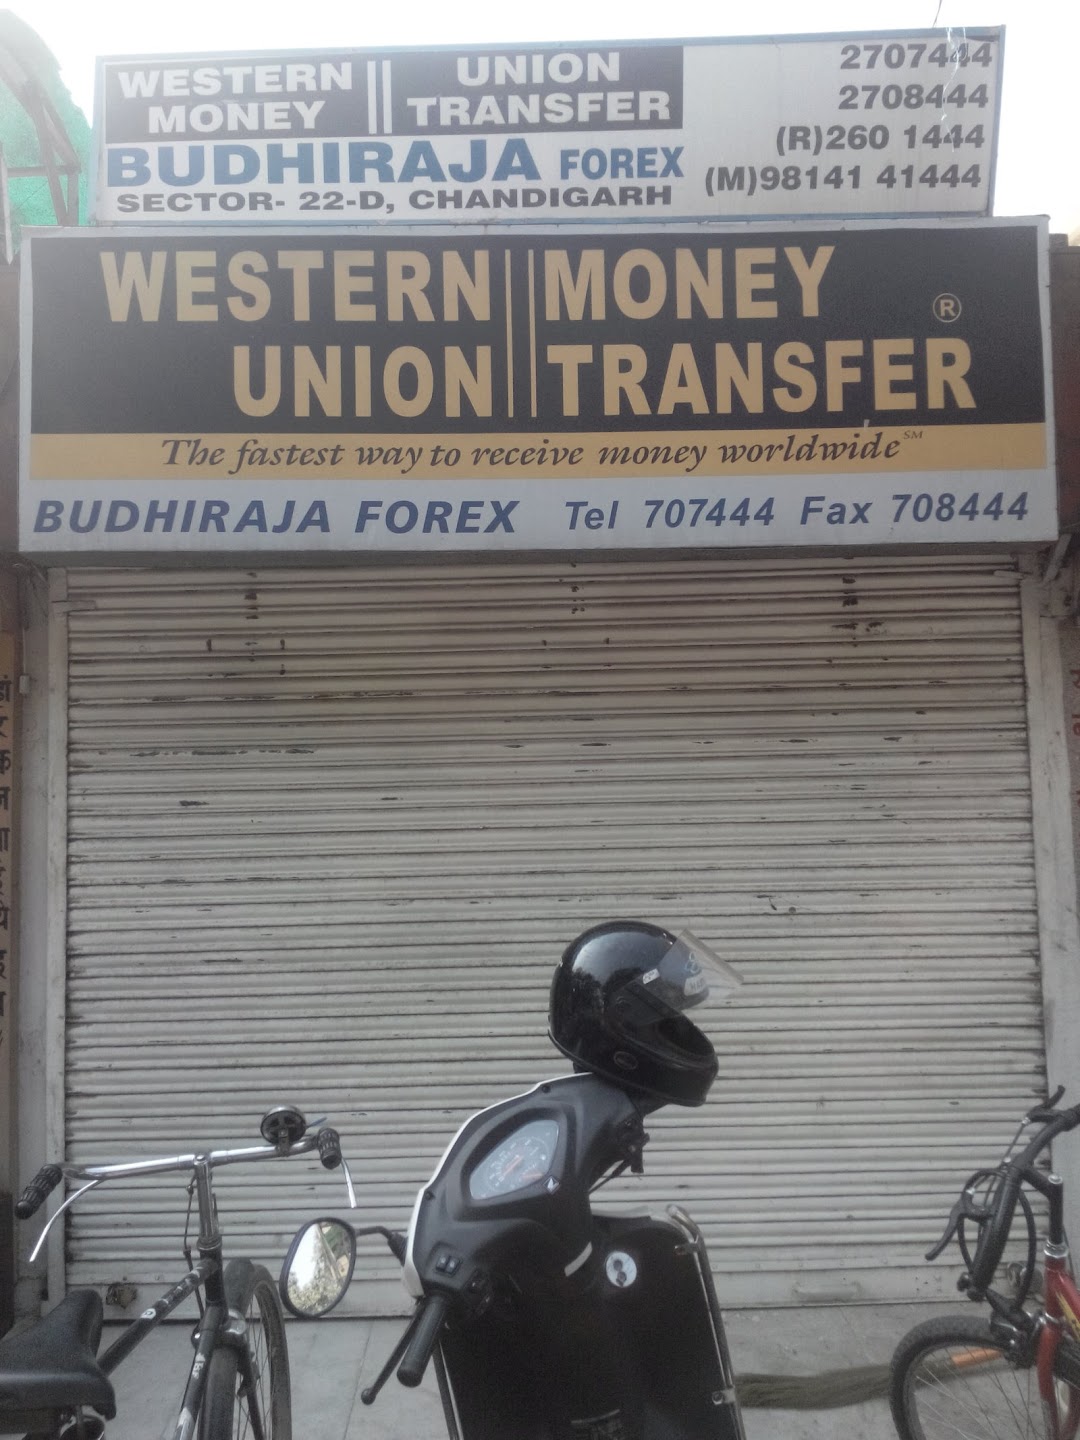 Western Union Money Transfer Budhiraja Forex